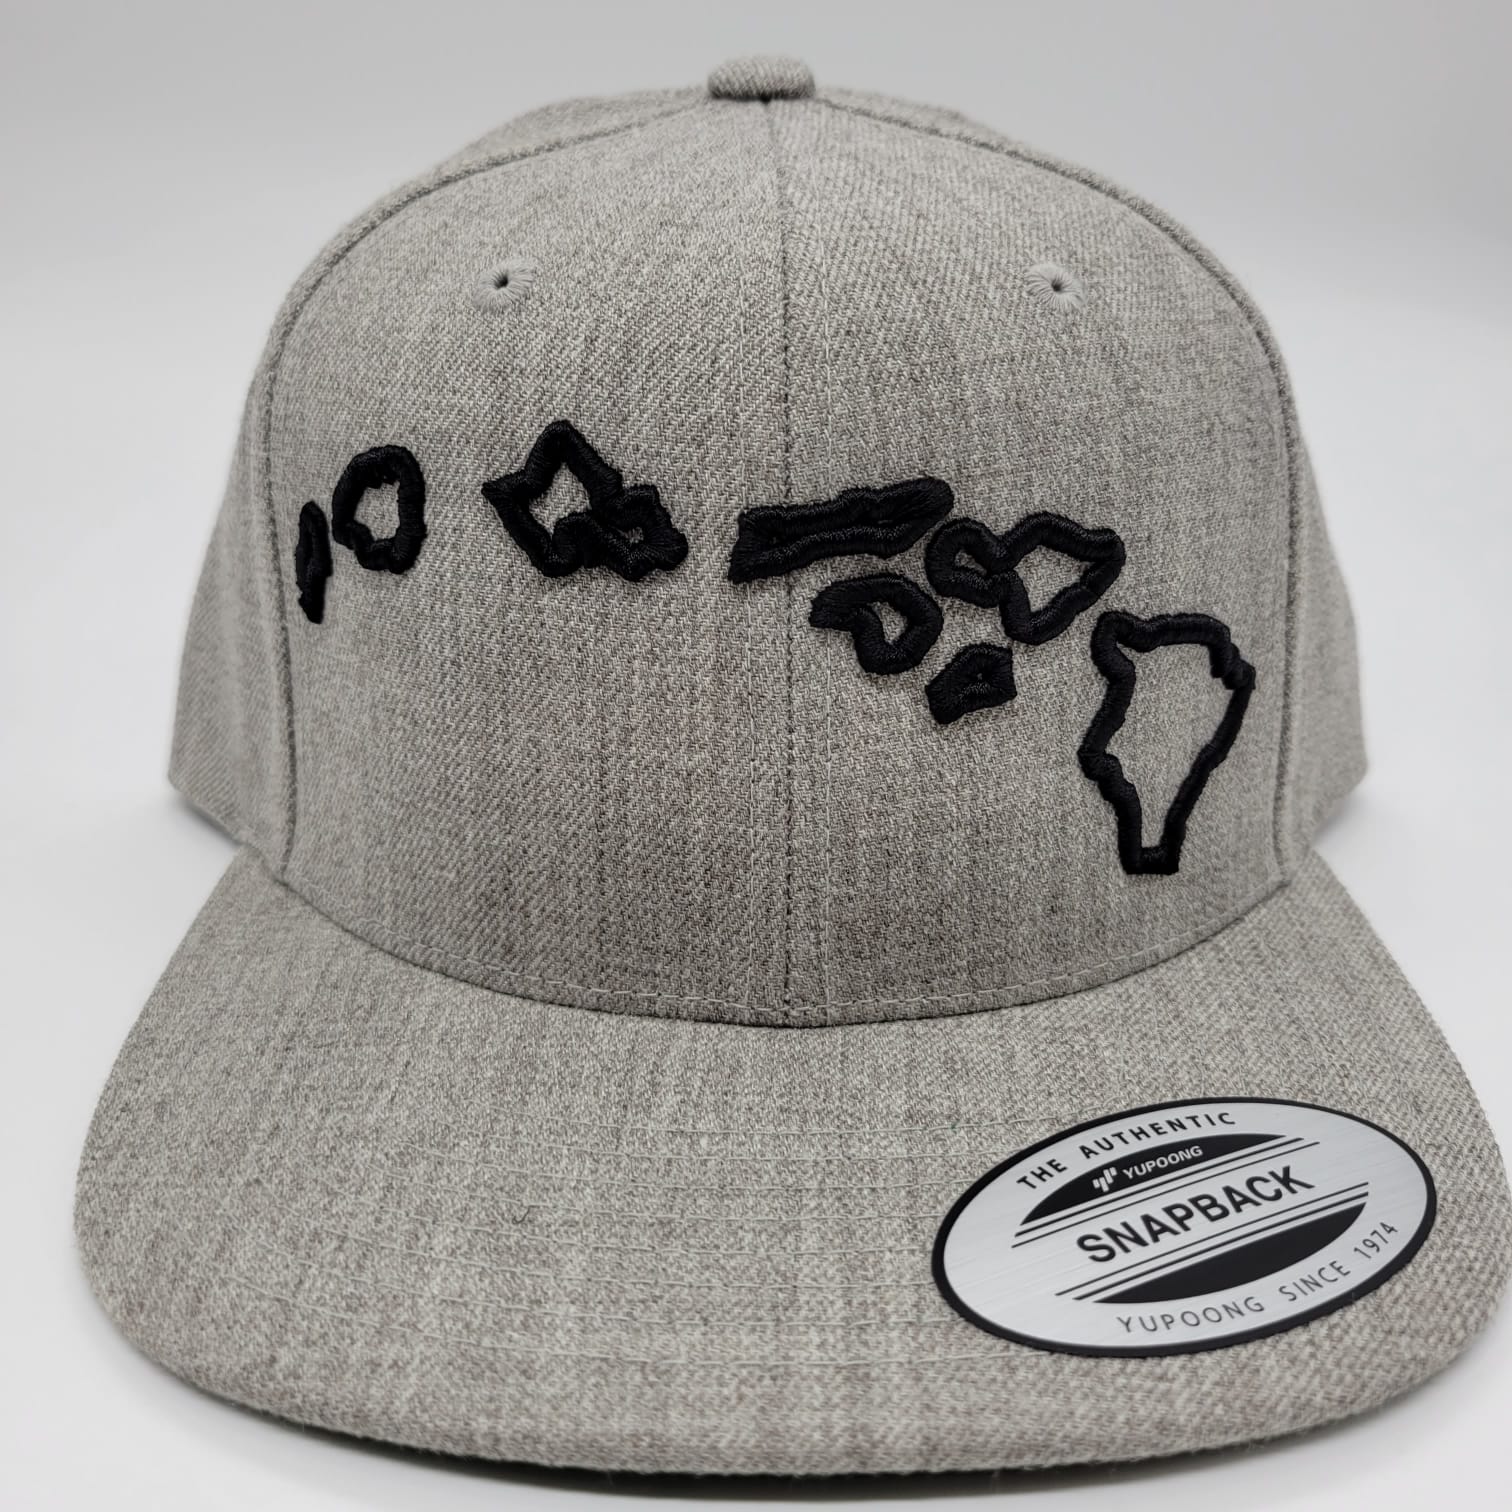 Pop-Up Mākeke - Route 99 - 3D Hawaii Islands Snapback Hat in Grey - Front View